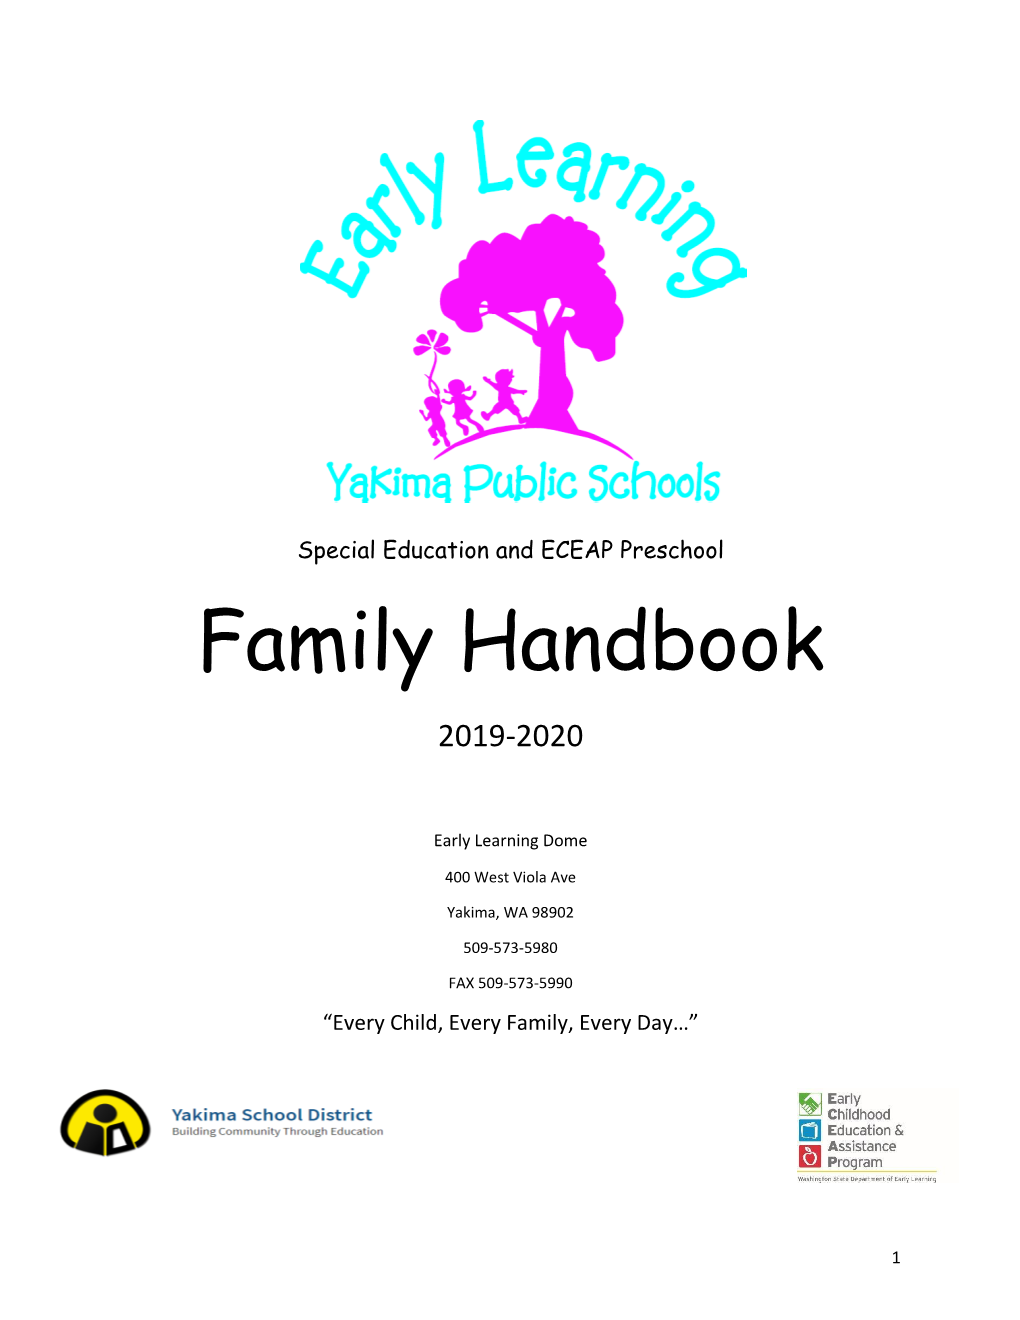 Early Learning Family Handbook